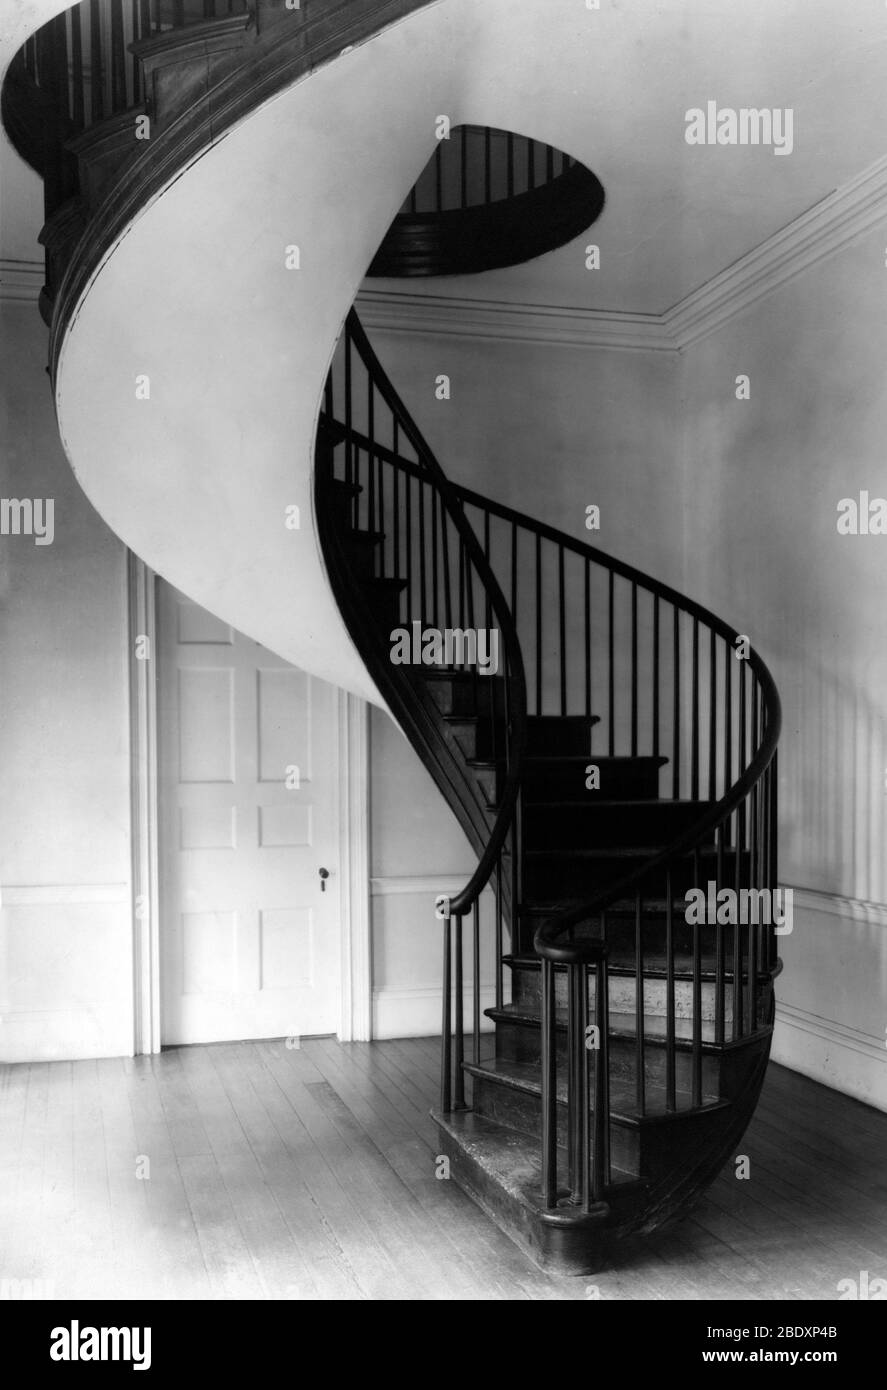 Spiral Staircase Stock Photo